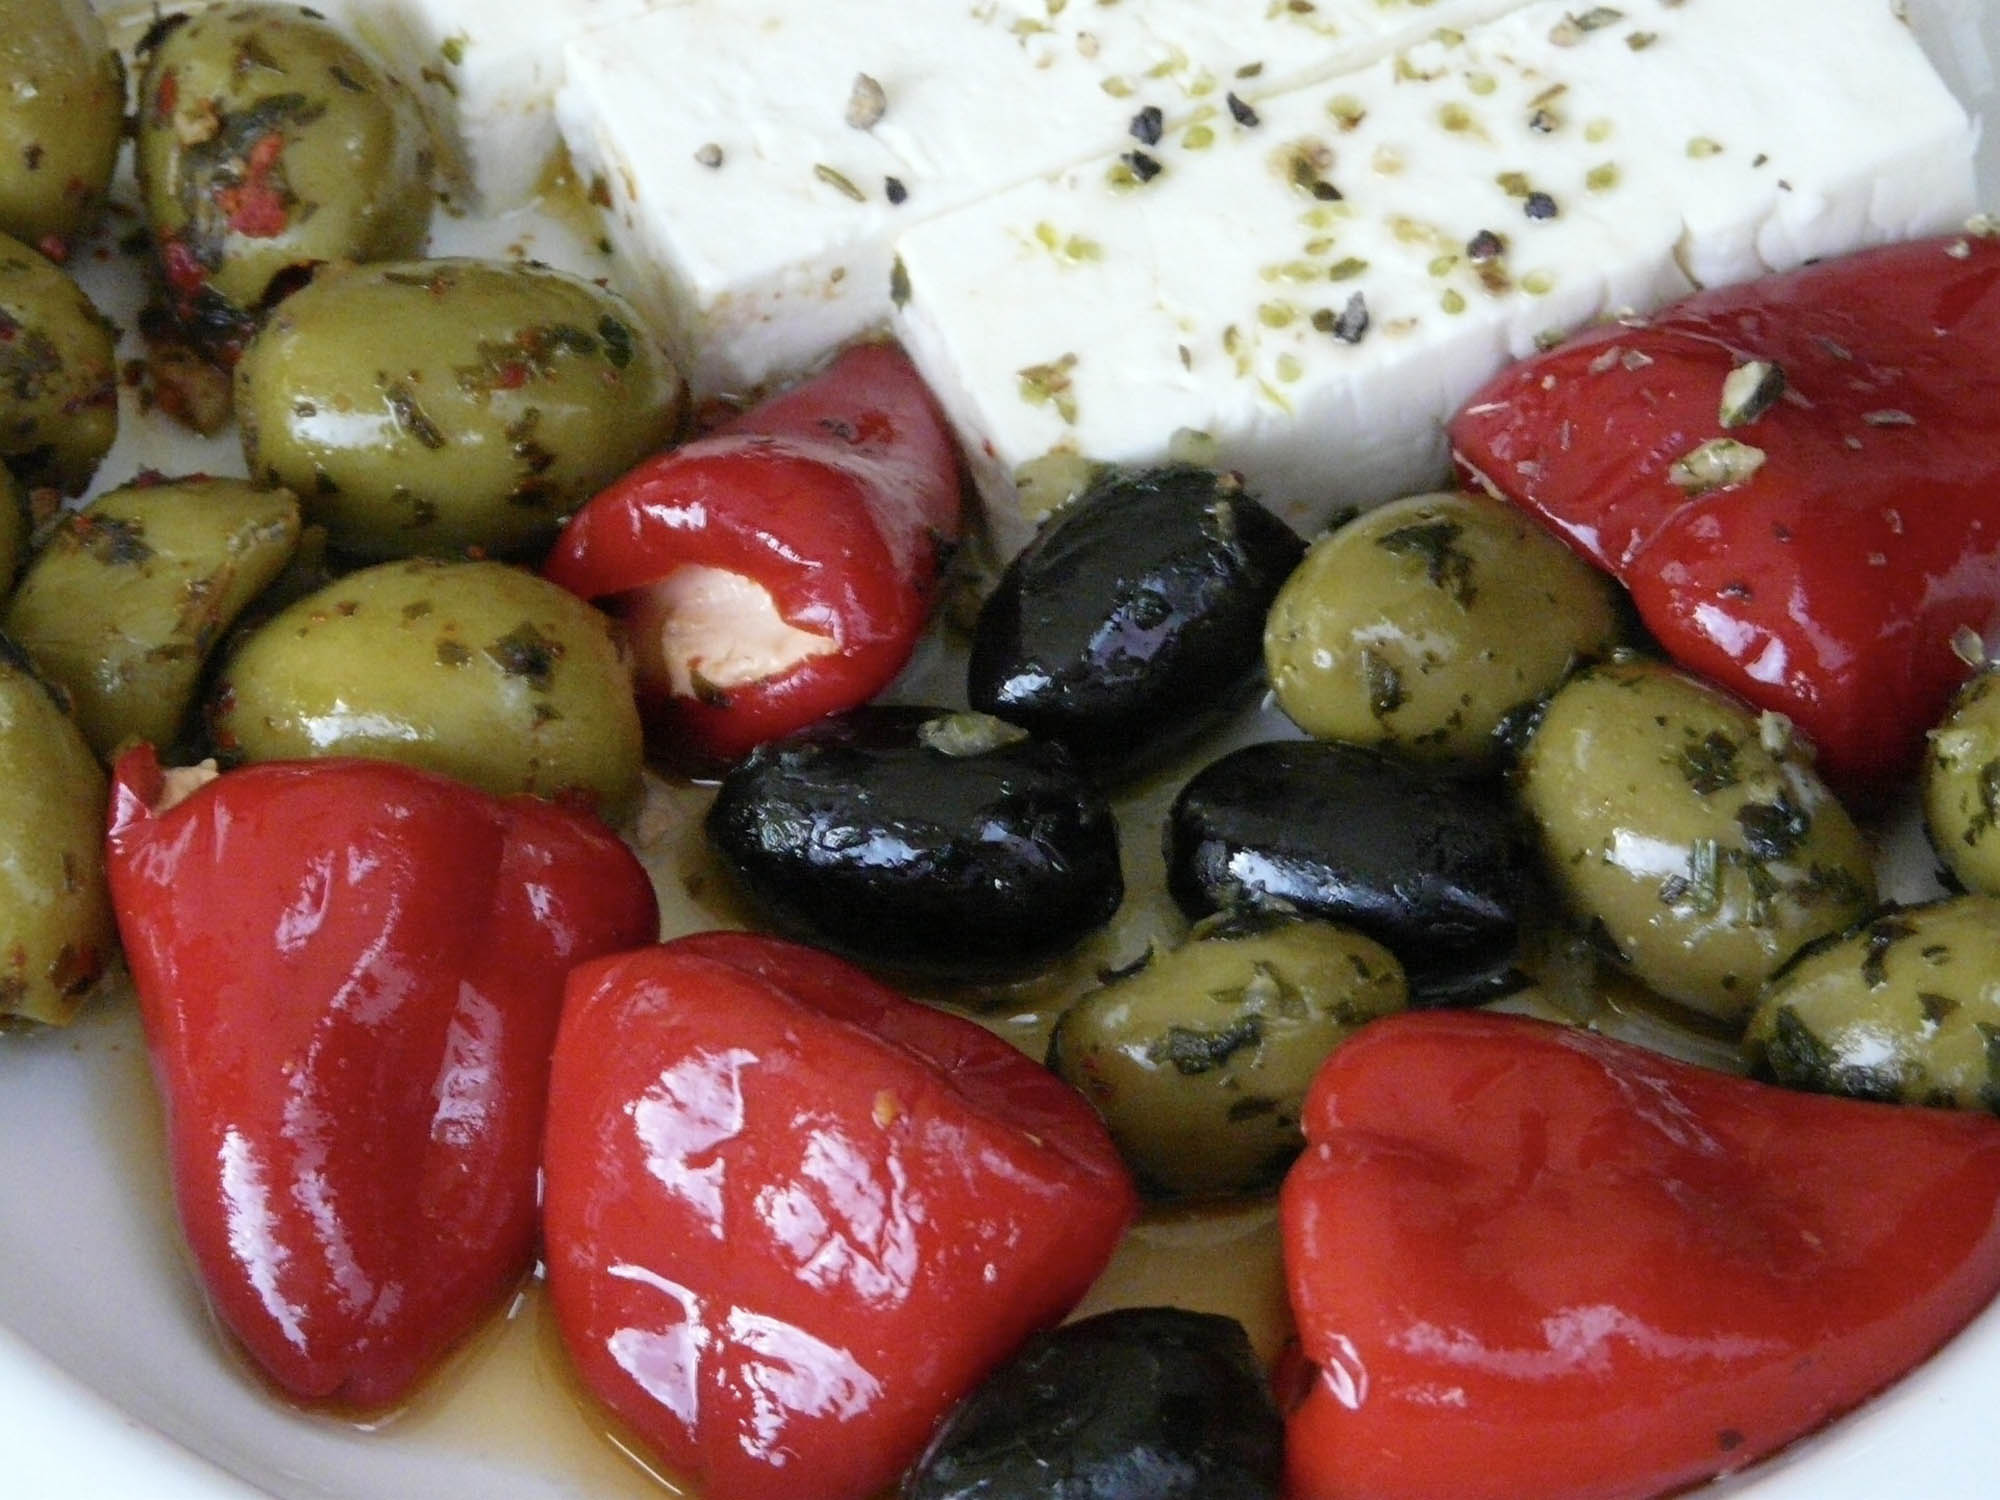 greckie składniki, papryka, pomidory, oliwki i grecka oliwa